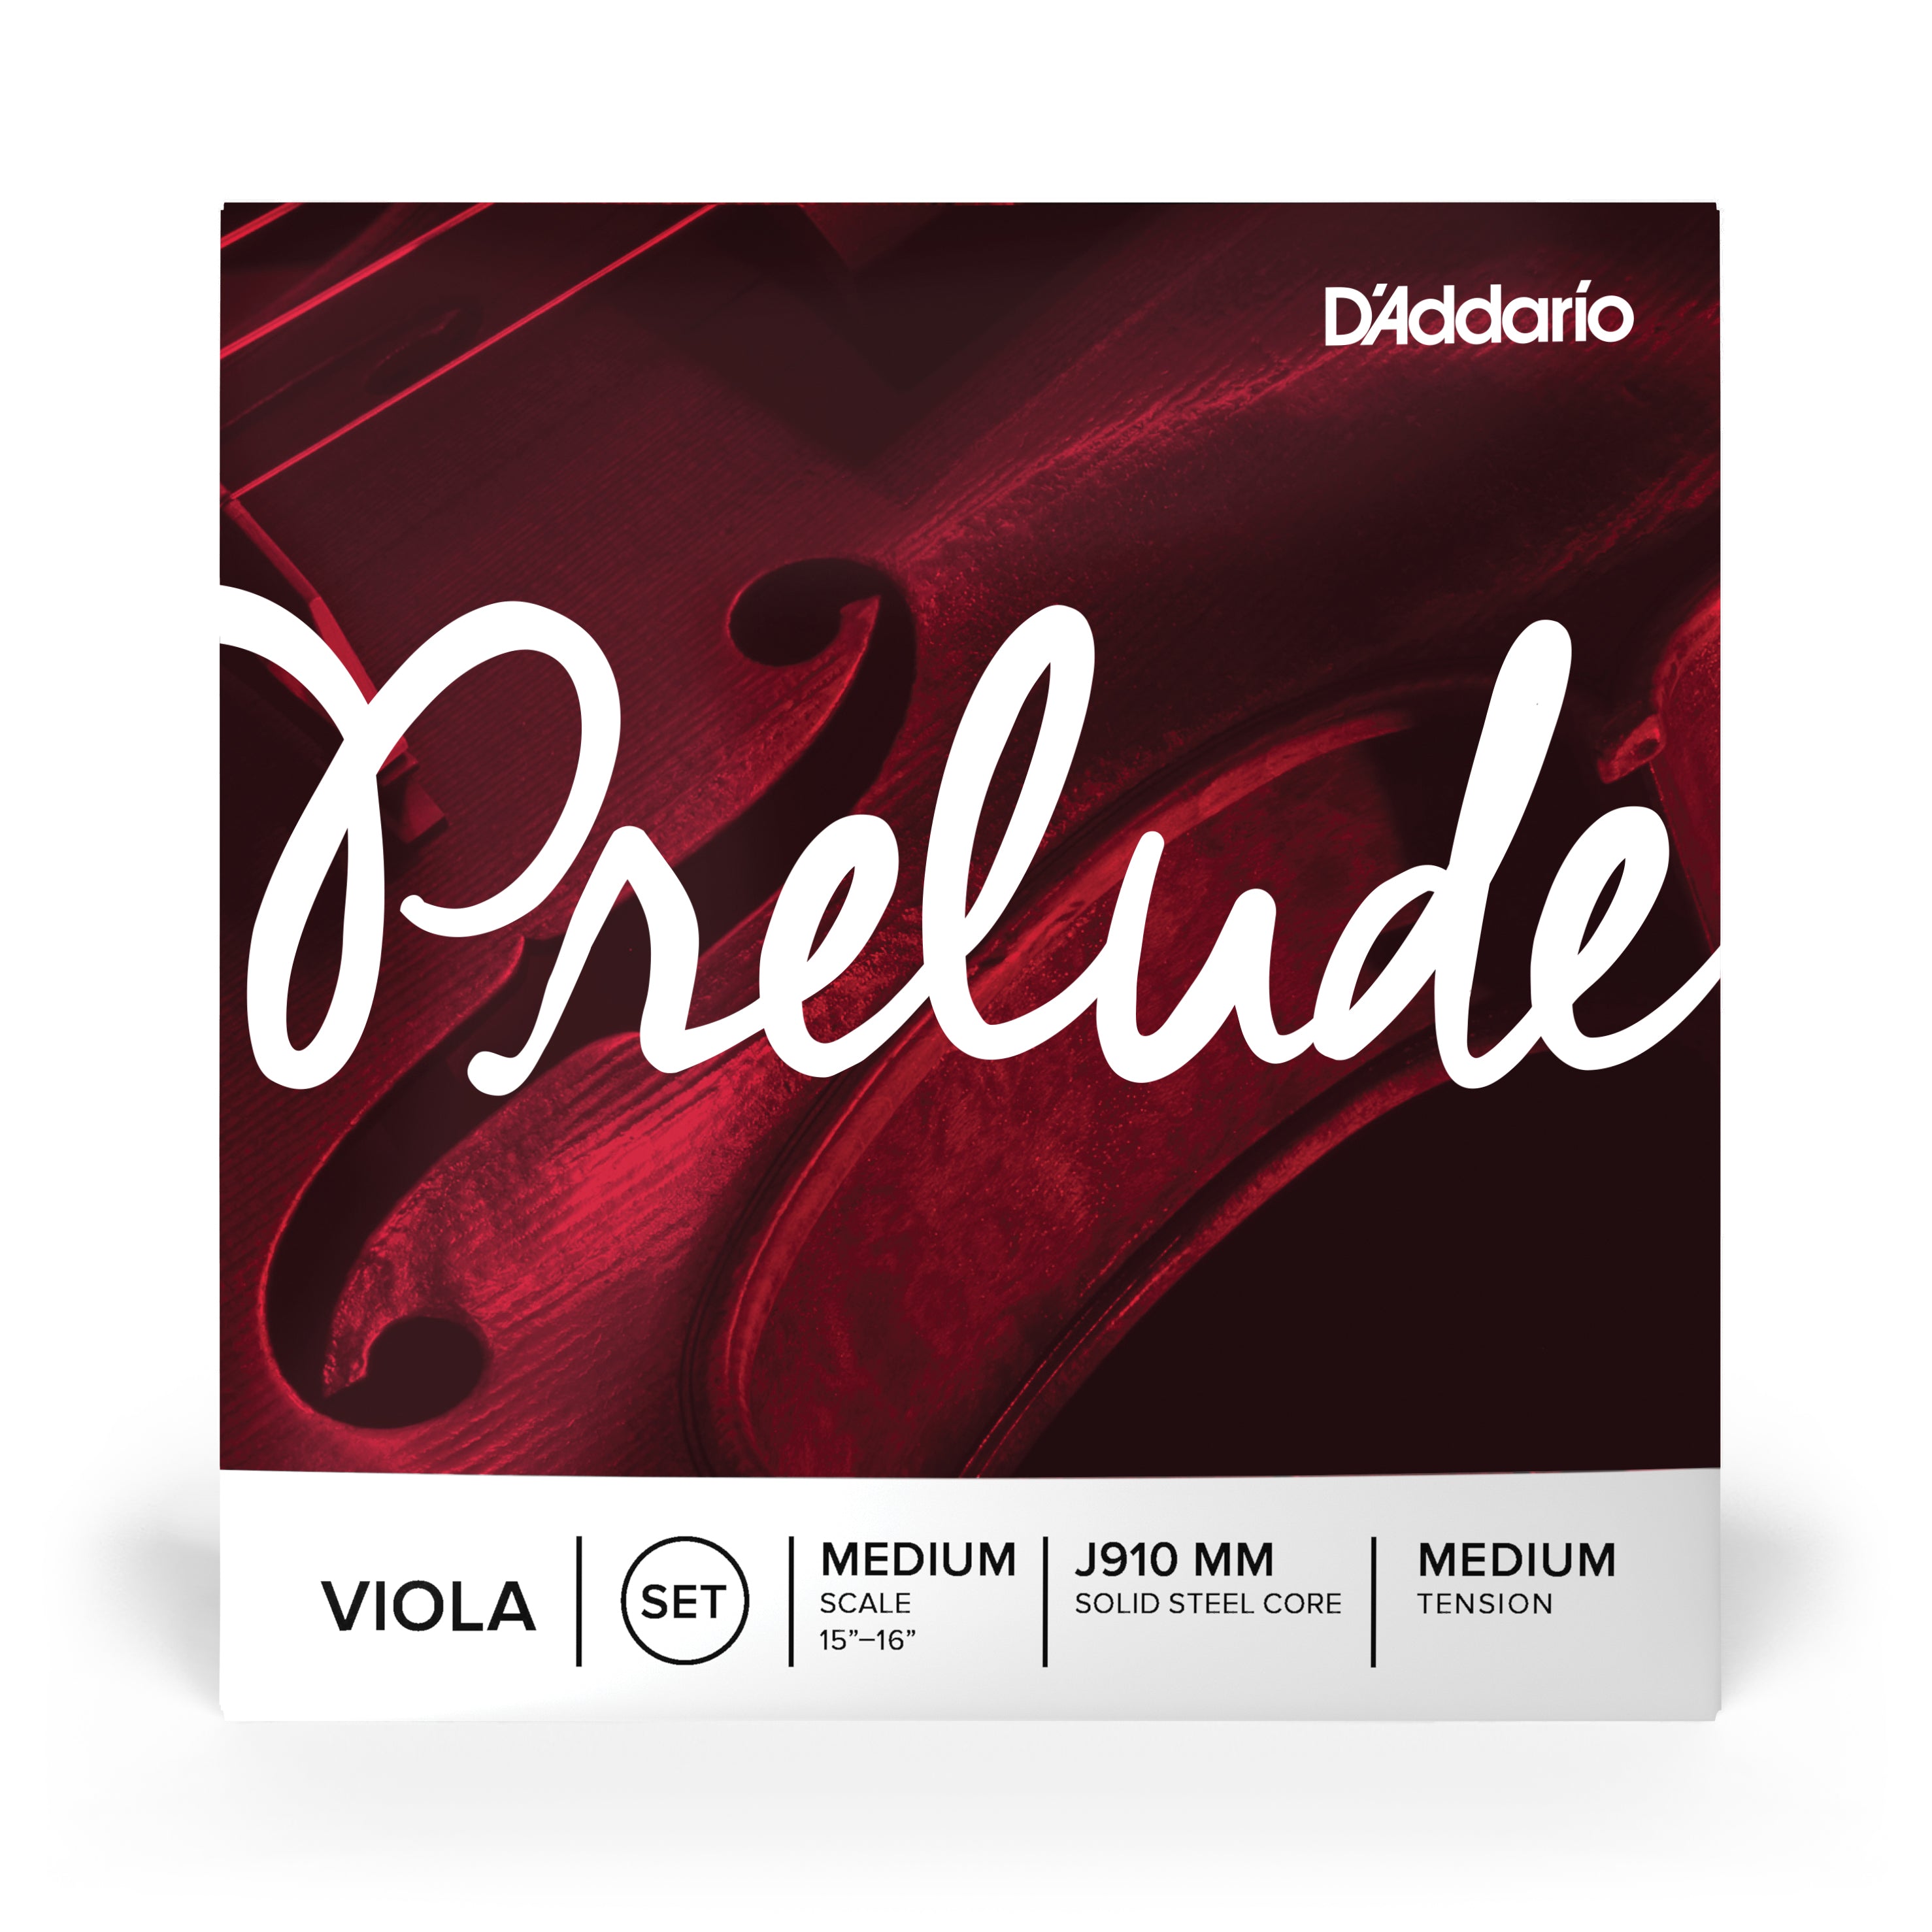 D'Addario Prelude Viola Medium Tension / Medium Scale